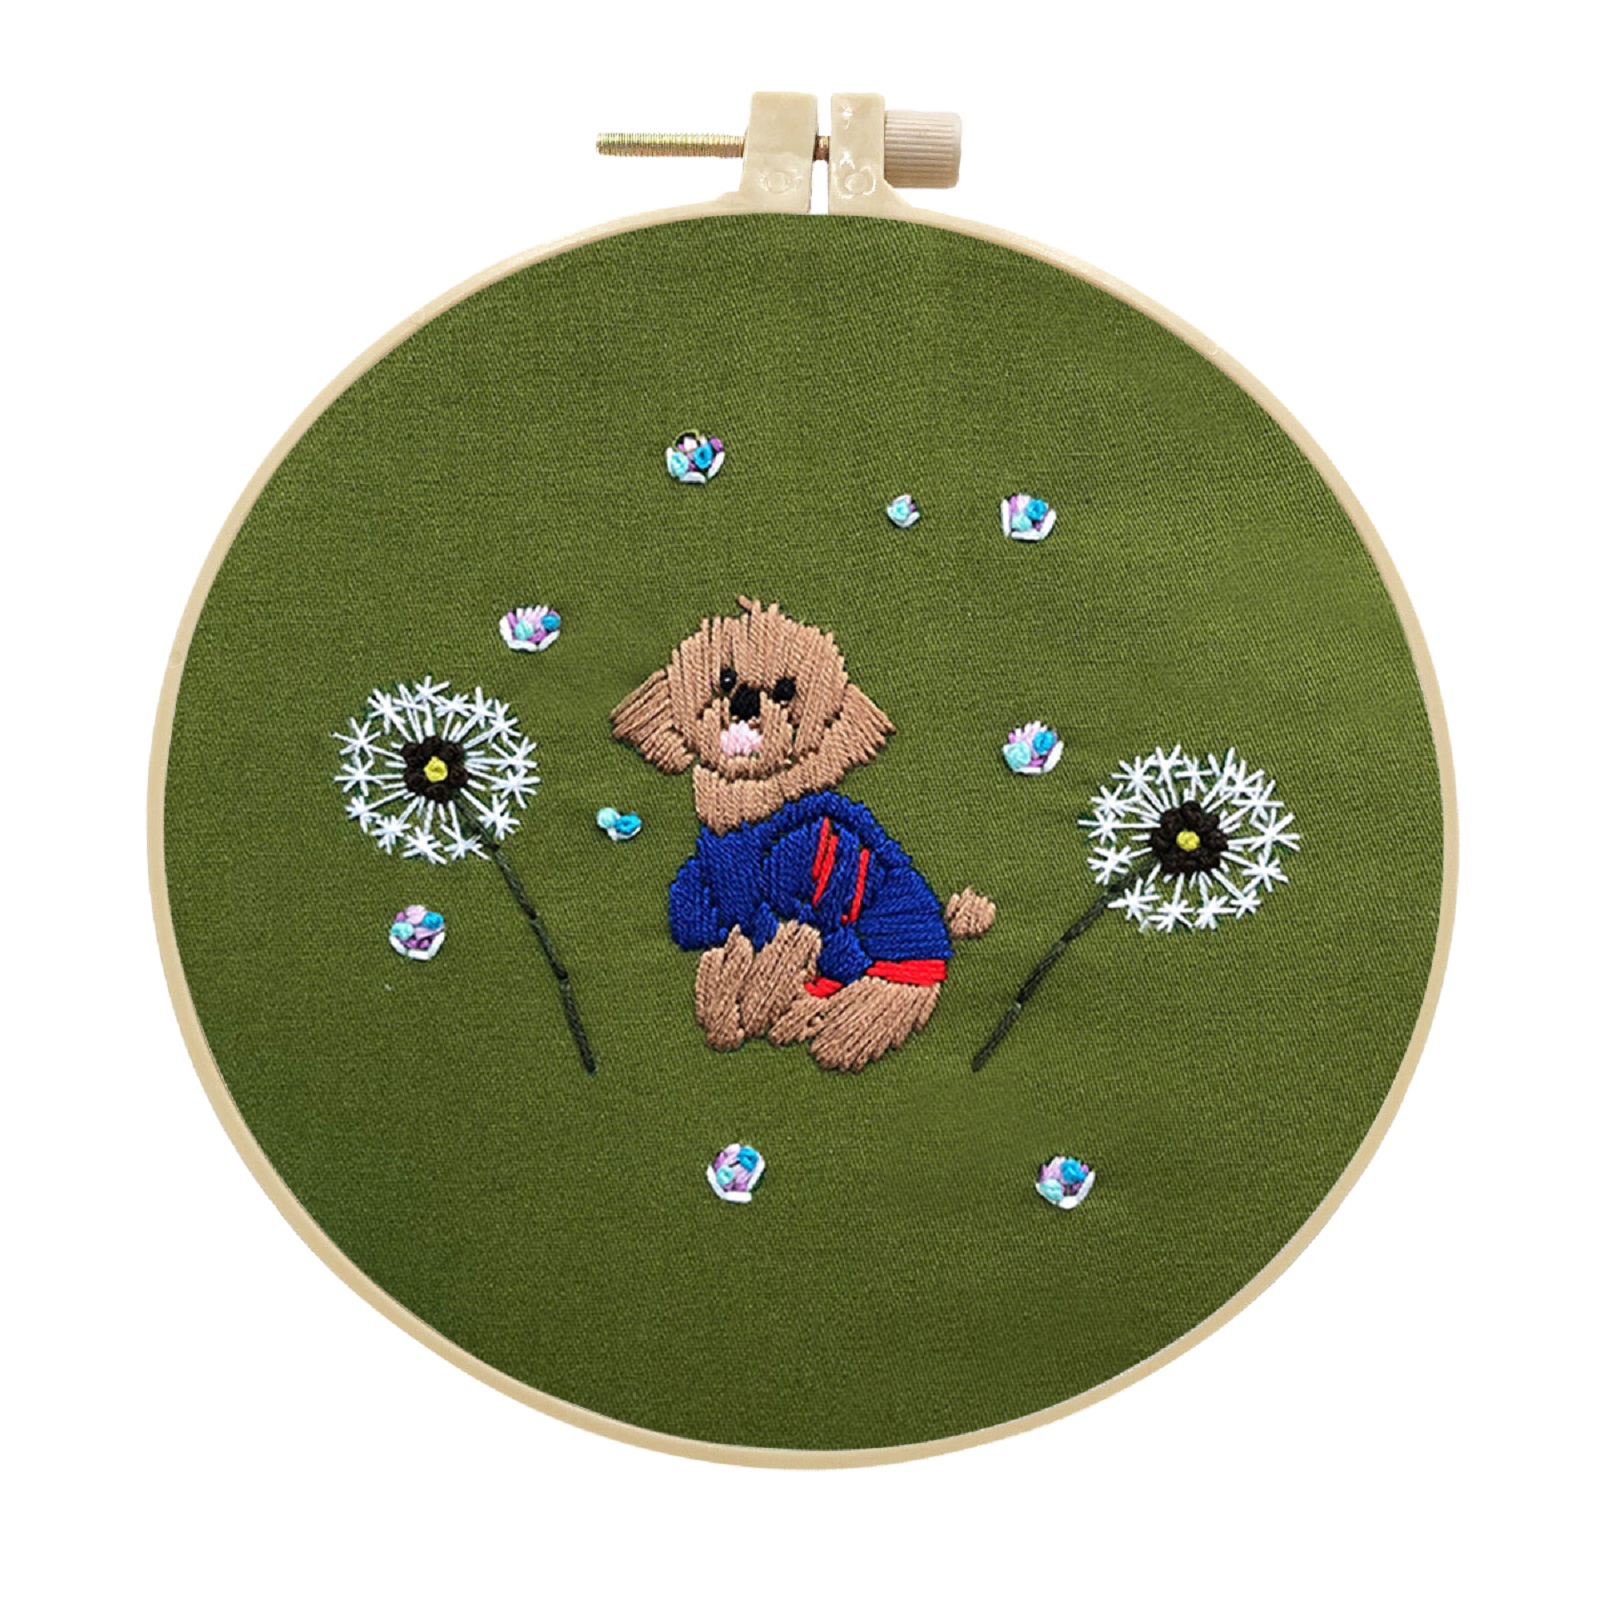 Handmade Embroidery Kit Cross stitch kit for Adult Beginner- - Teddy Pattern